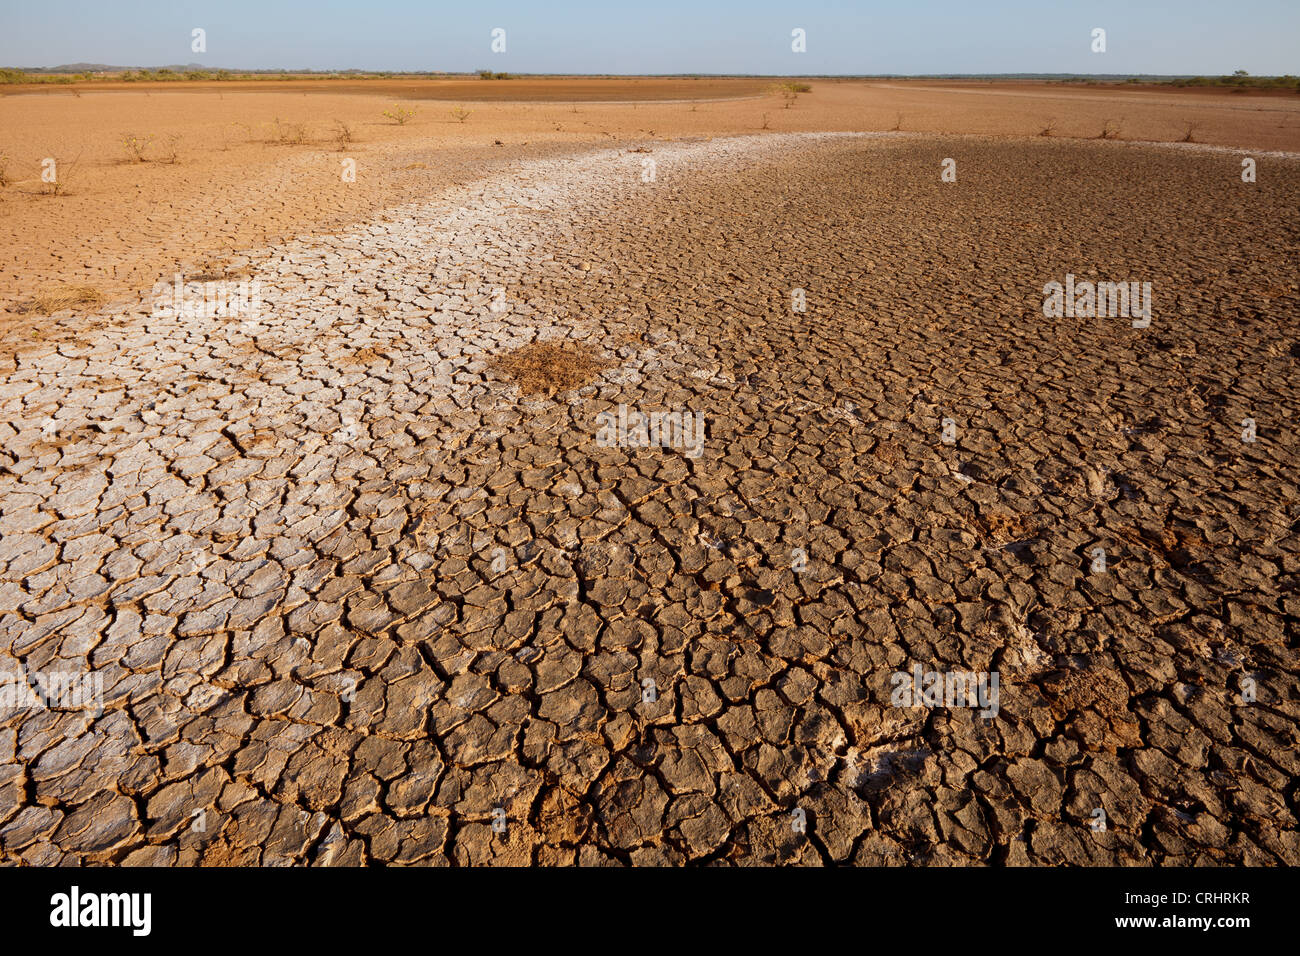 Cracked soil in Sarigua national park (desert), in Herrera province, Republic of Panama. Stock Photo